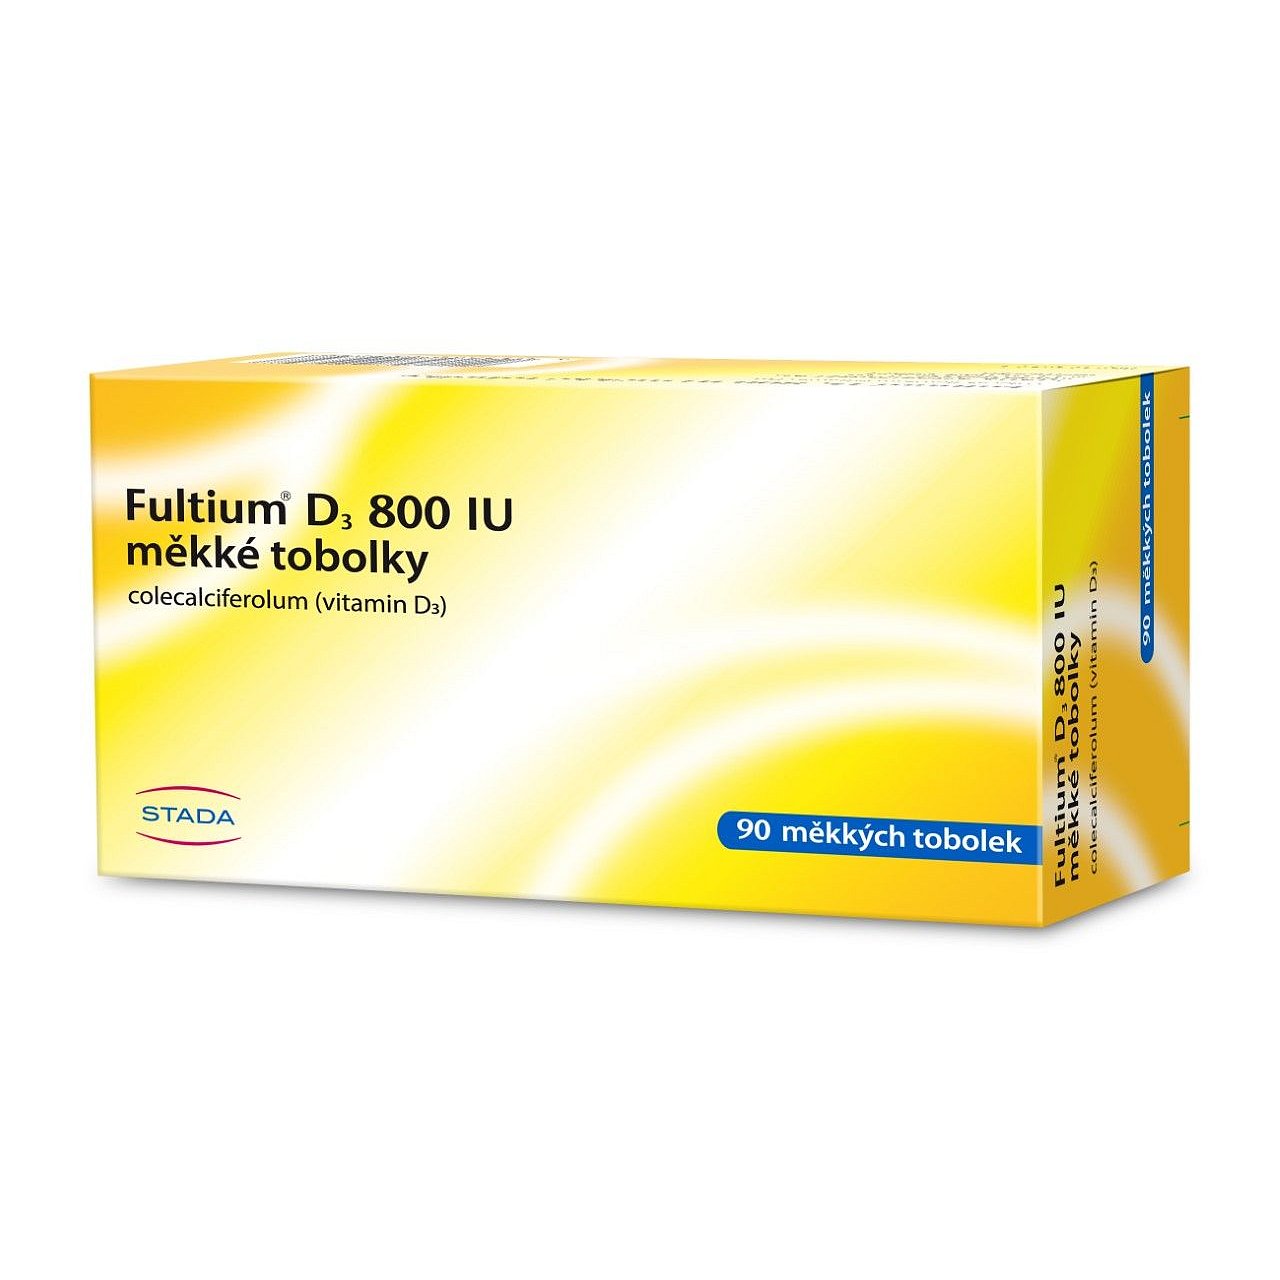 Fultium D3 800 IU 90 měkkých tobolek